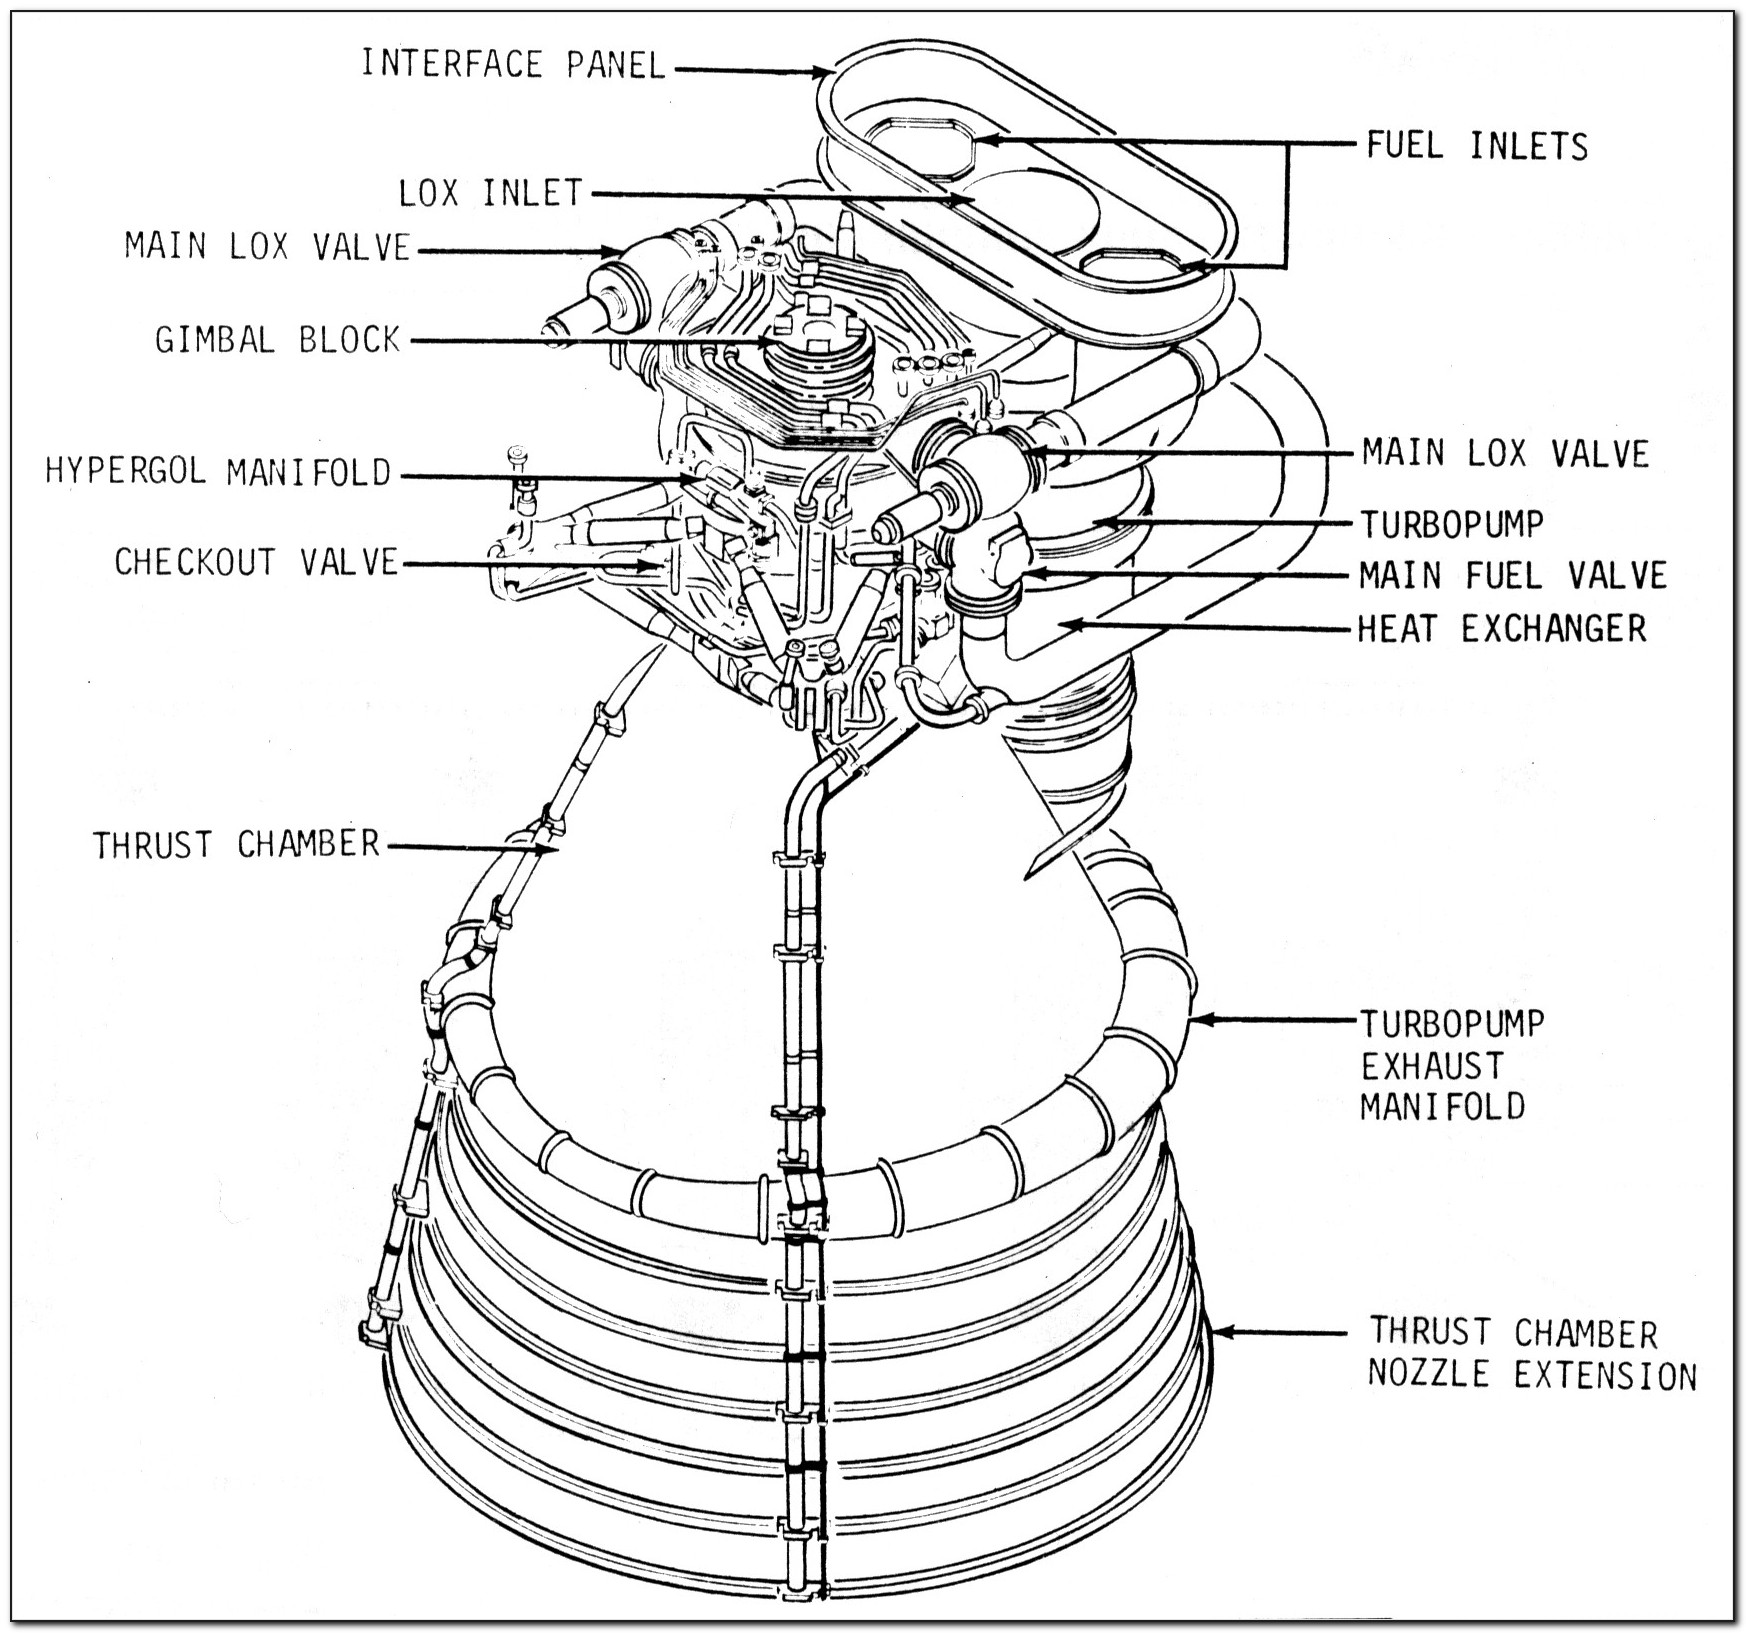 Engine Schematic Diagram